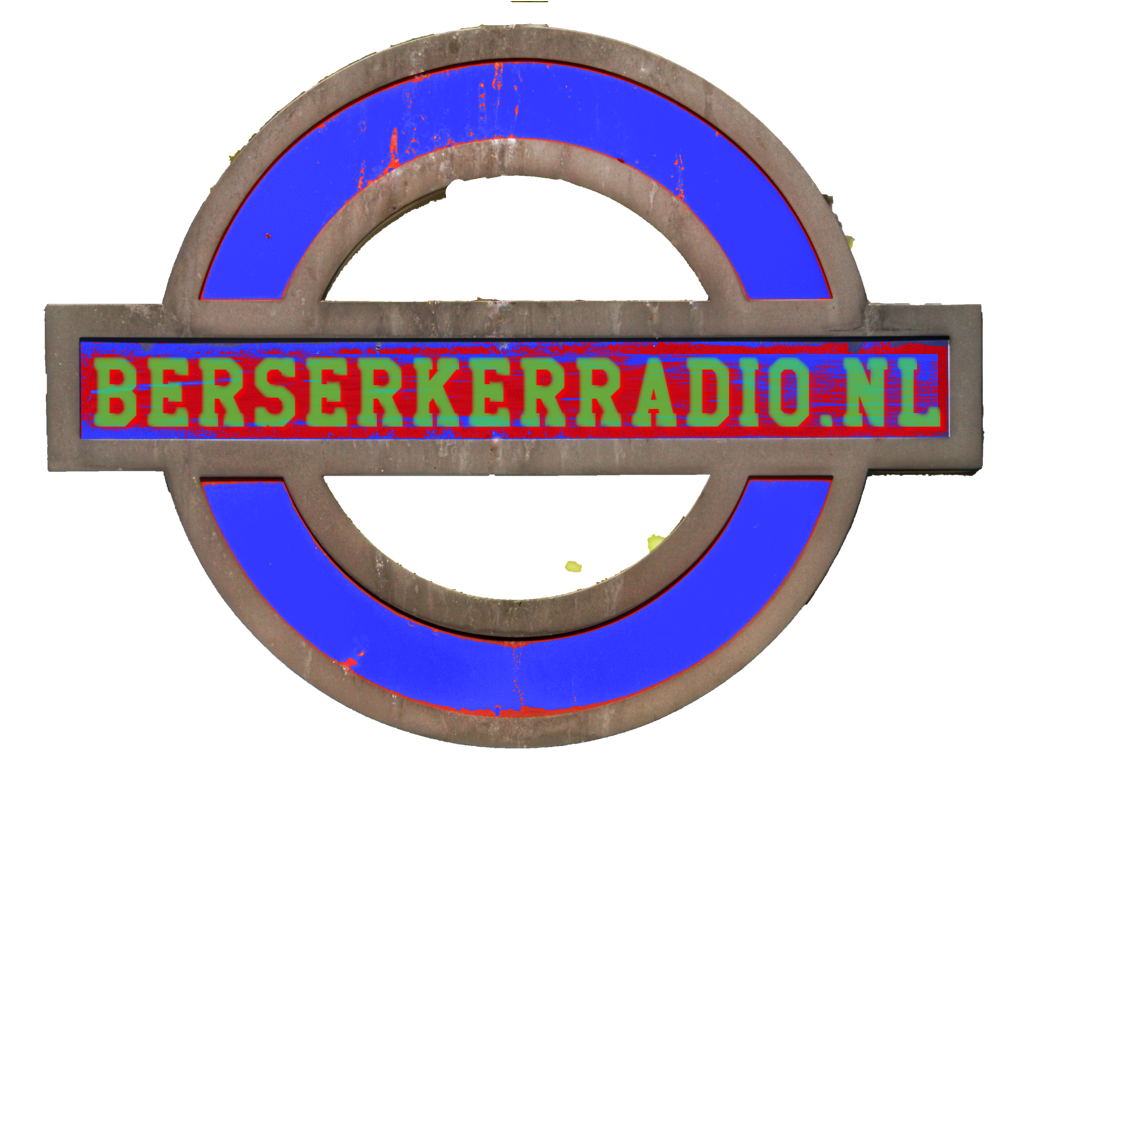 Berserkerradio.nl